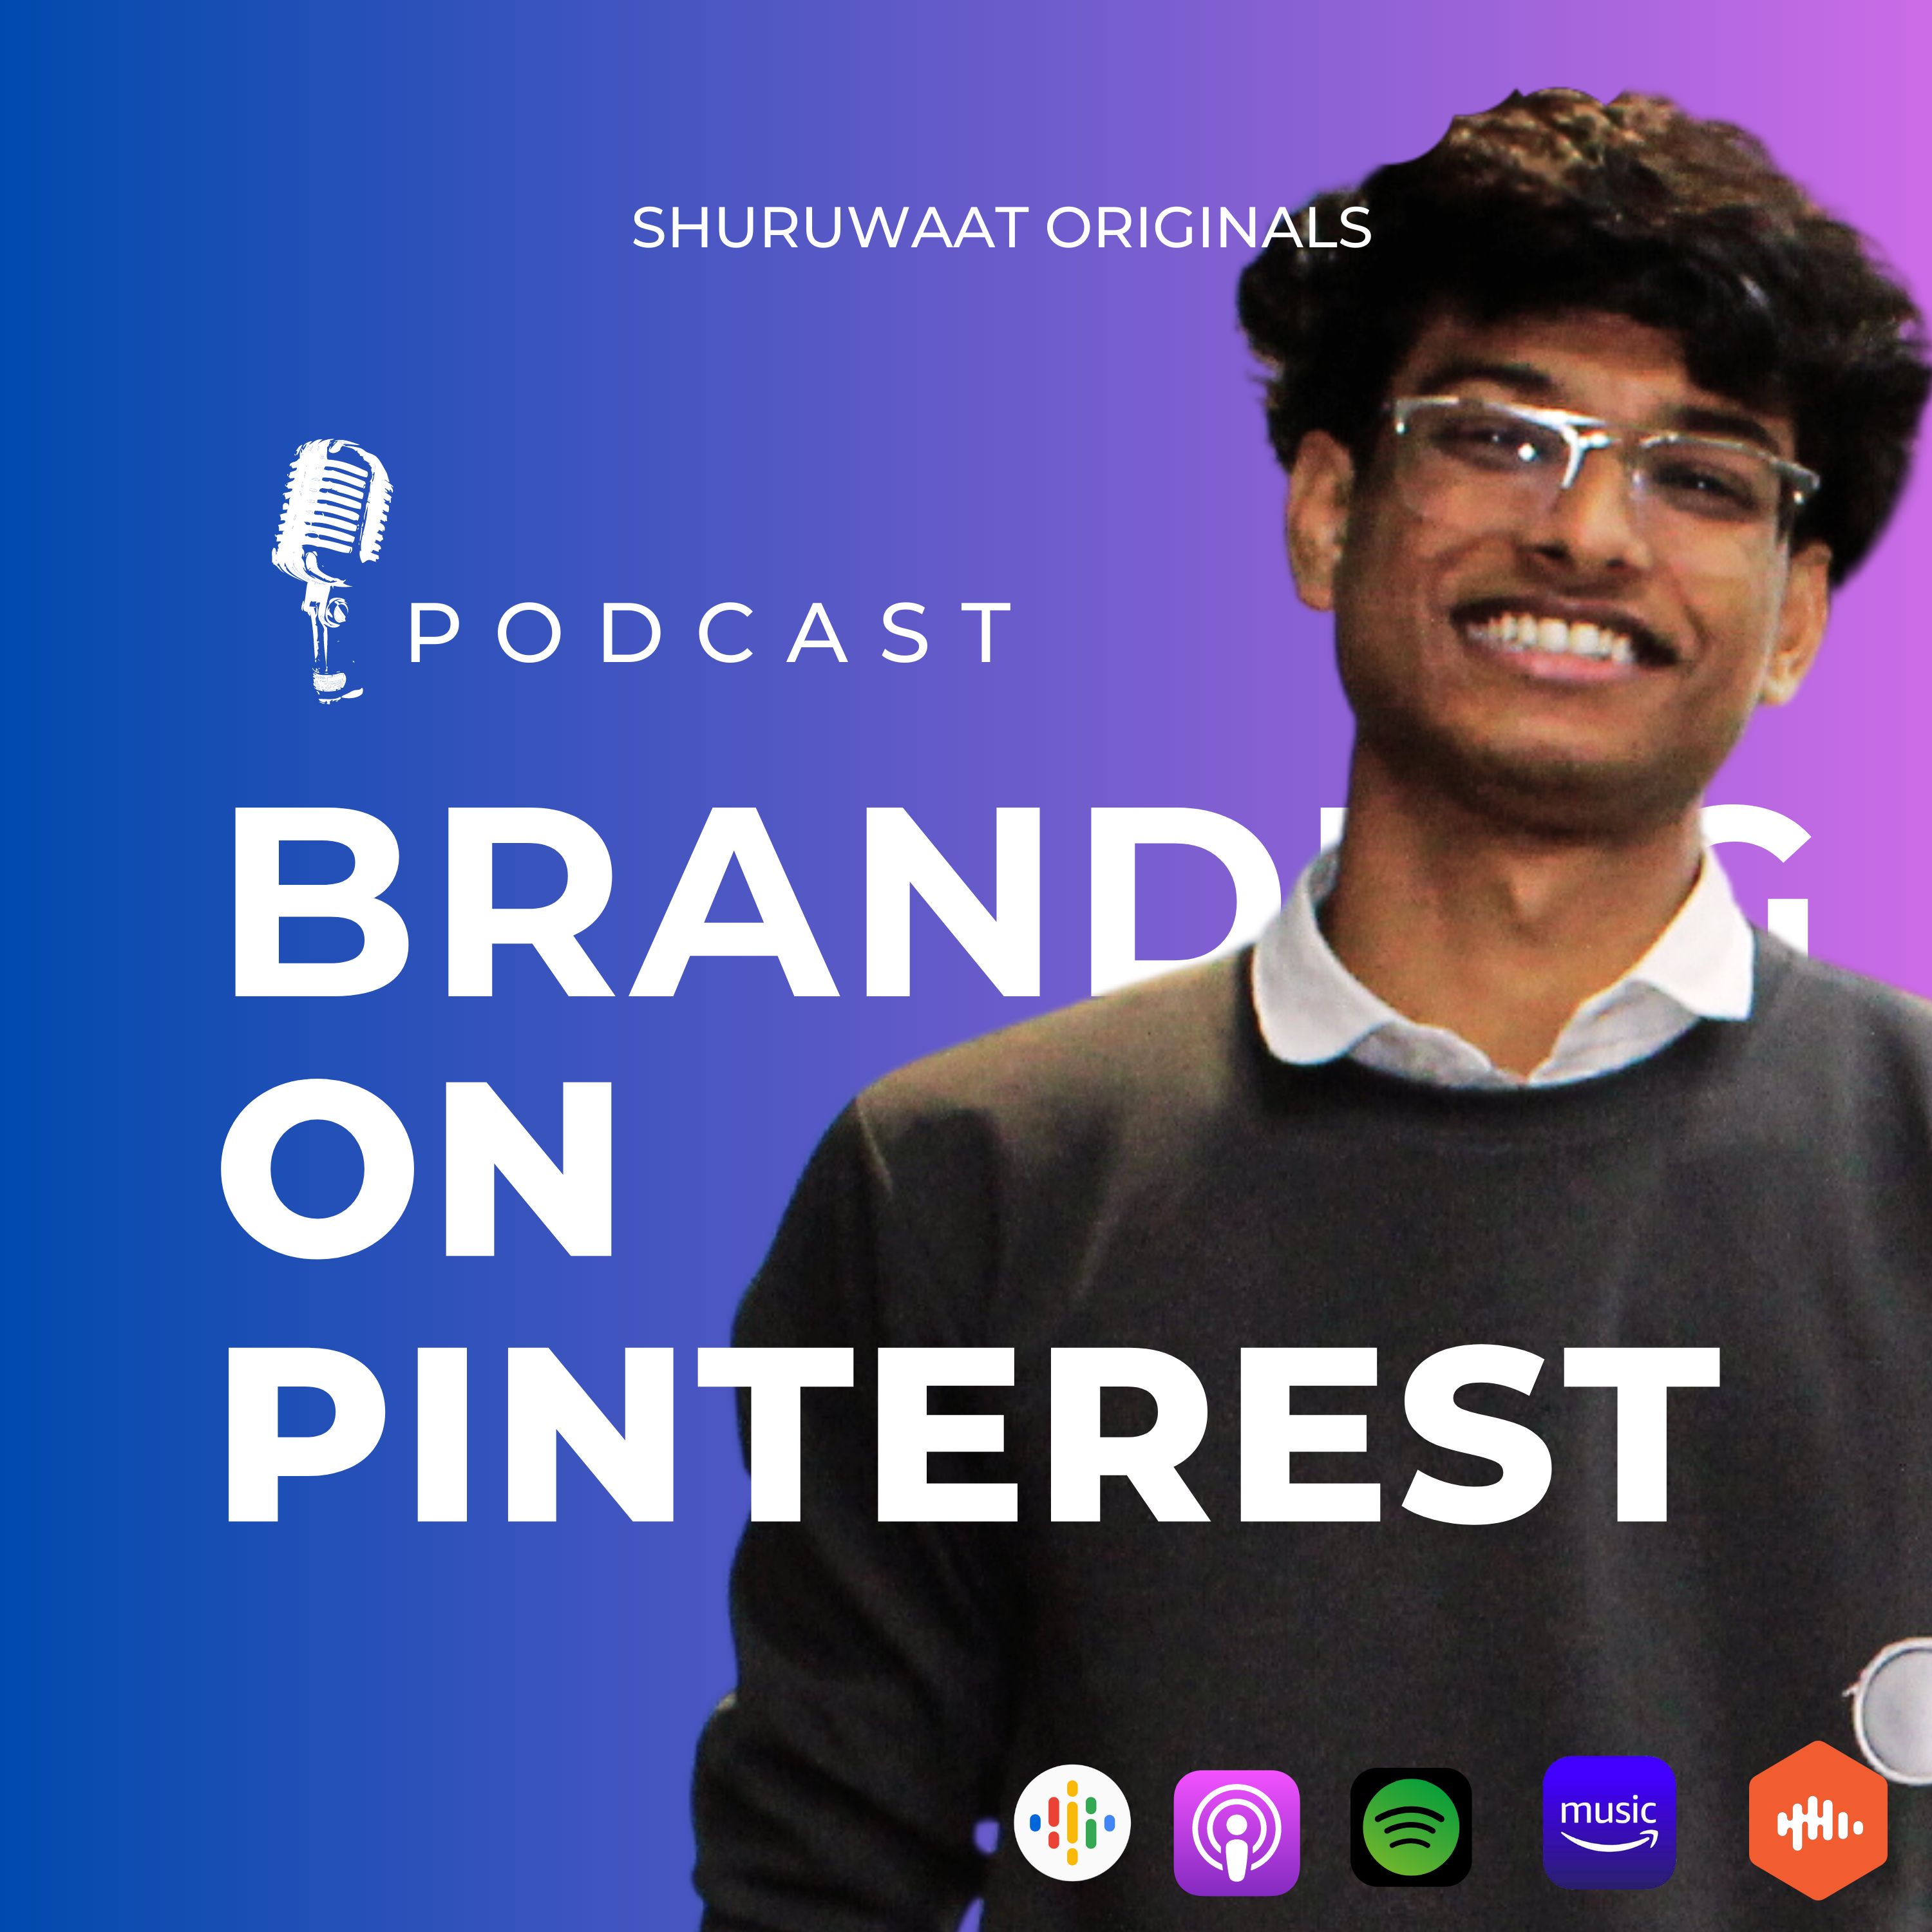 Brand Building through Pinterest